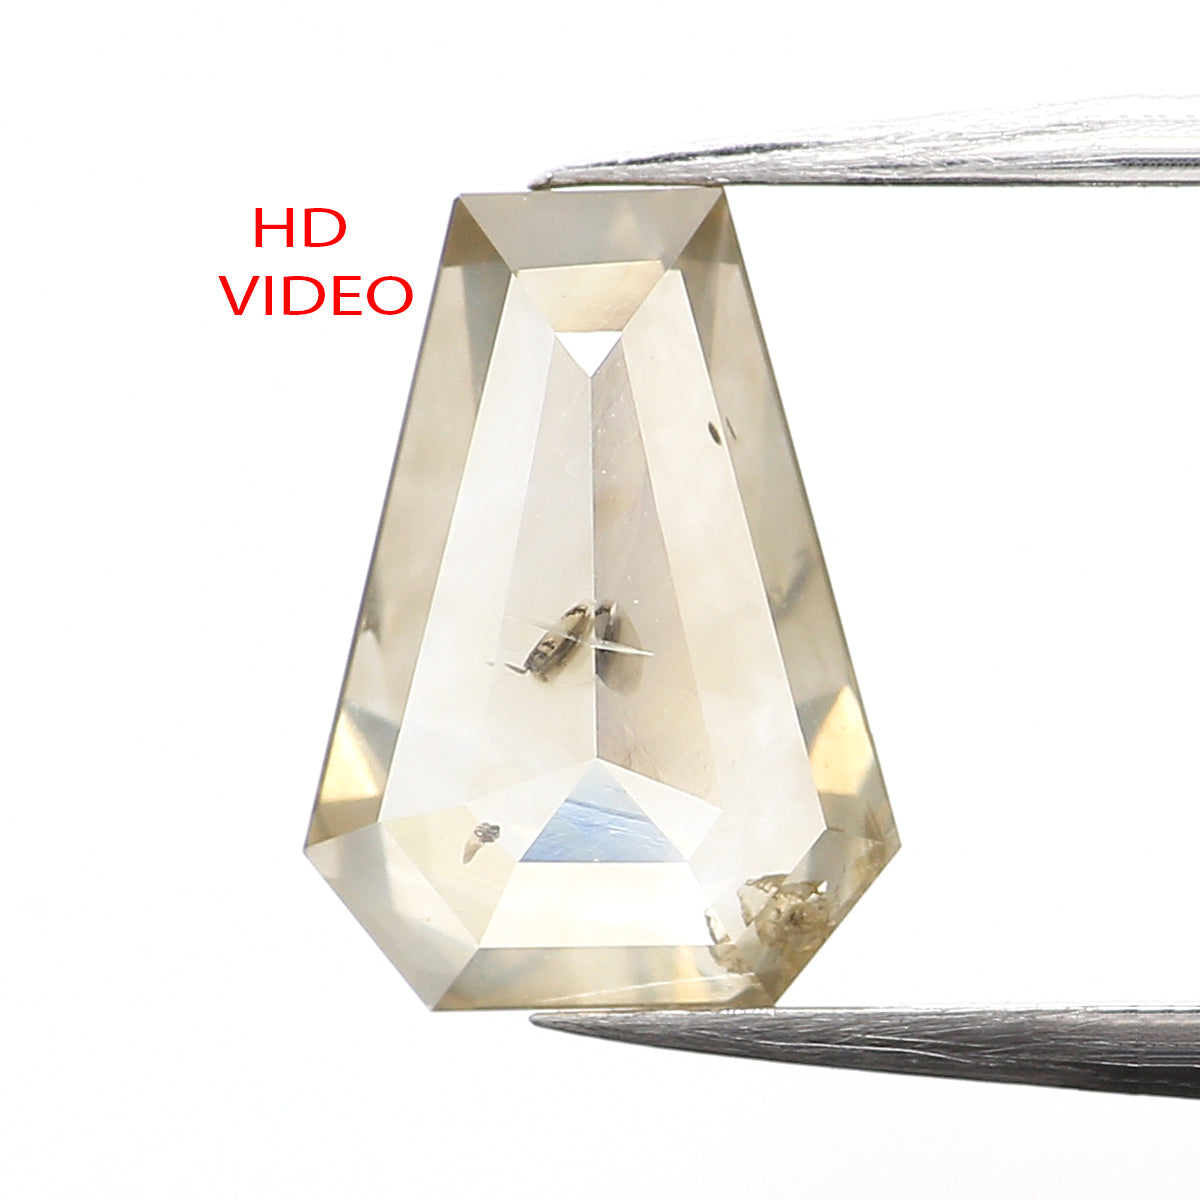 1.43 CT Natural Loose Diamond, Coffin Diamond, Grey Diamond, Yellow Diamond, Rose Cut Diamond, Coffin Cut Diamond, Fancy Color Diamond KDL387